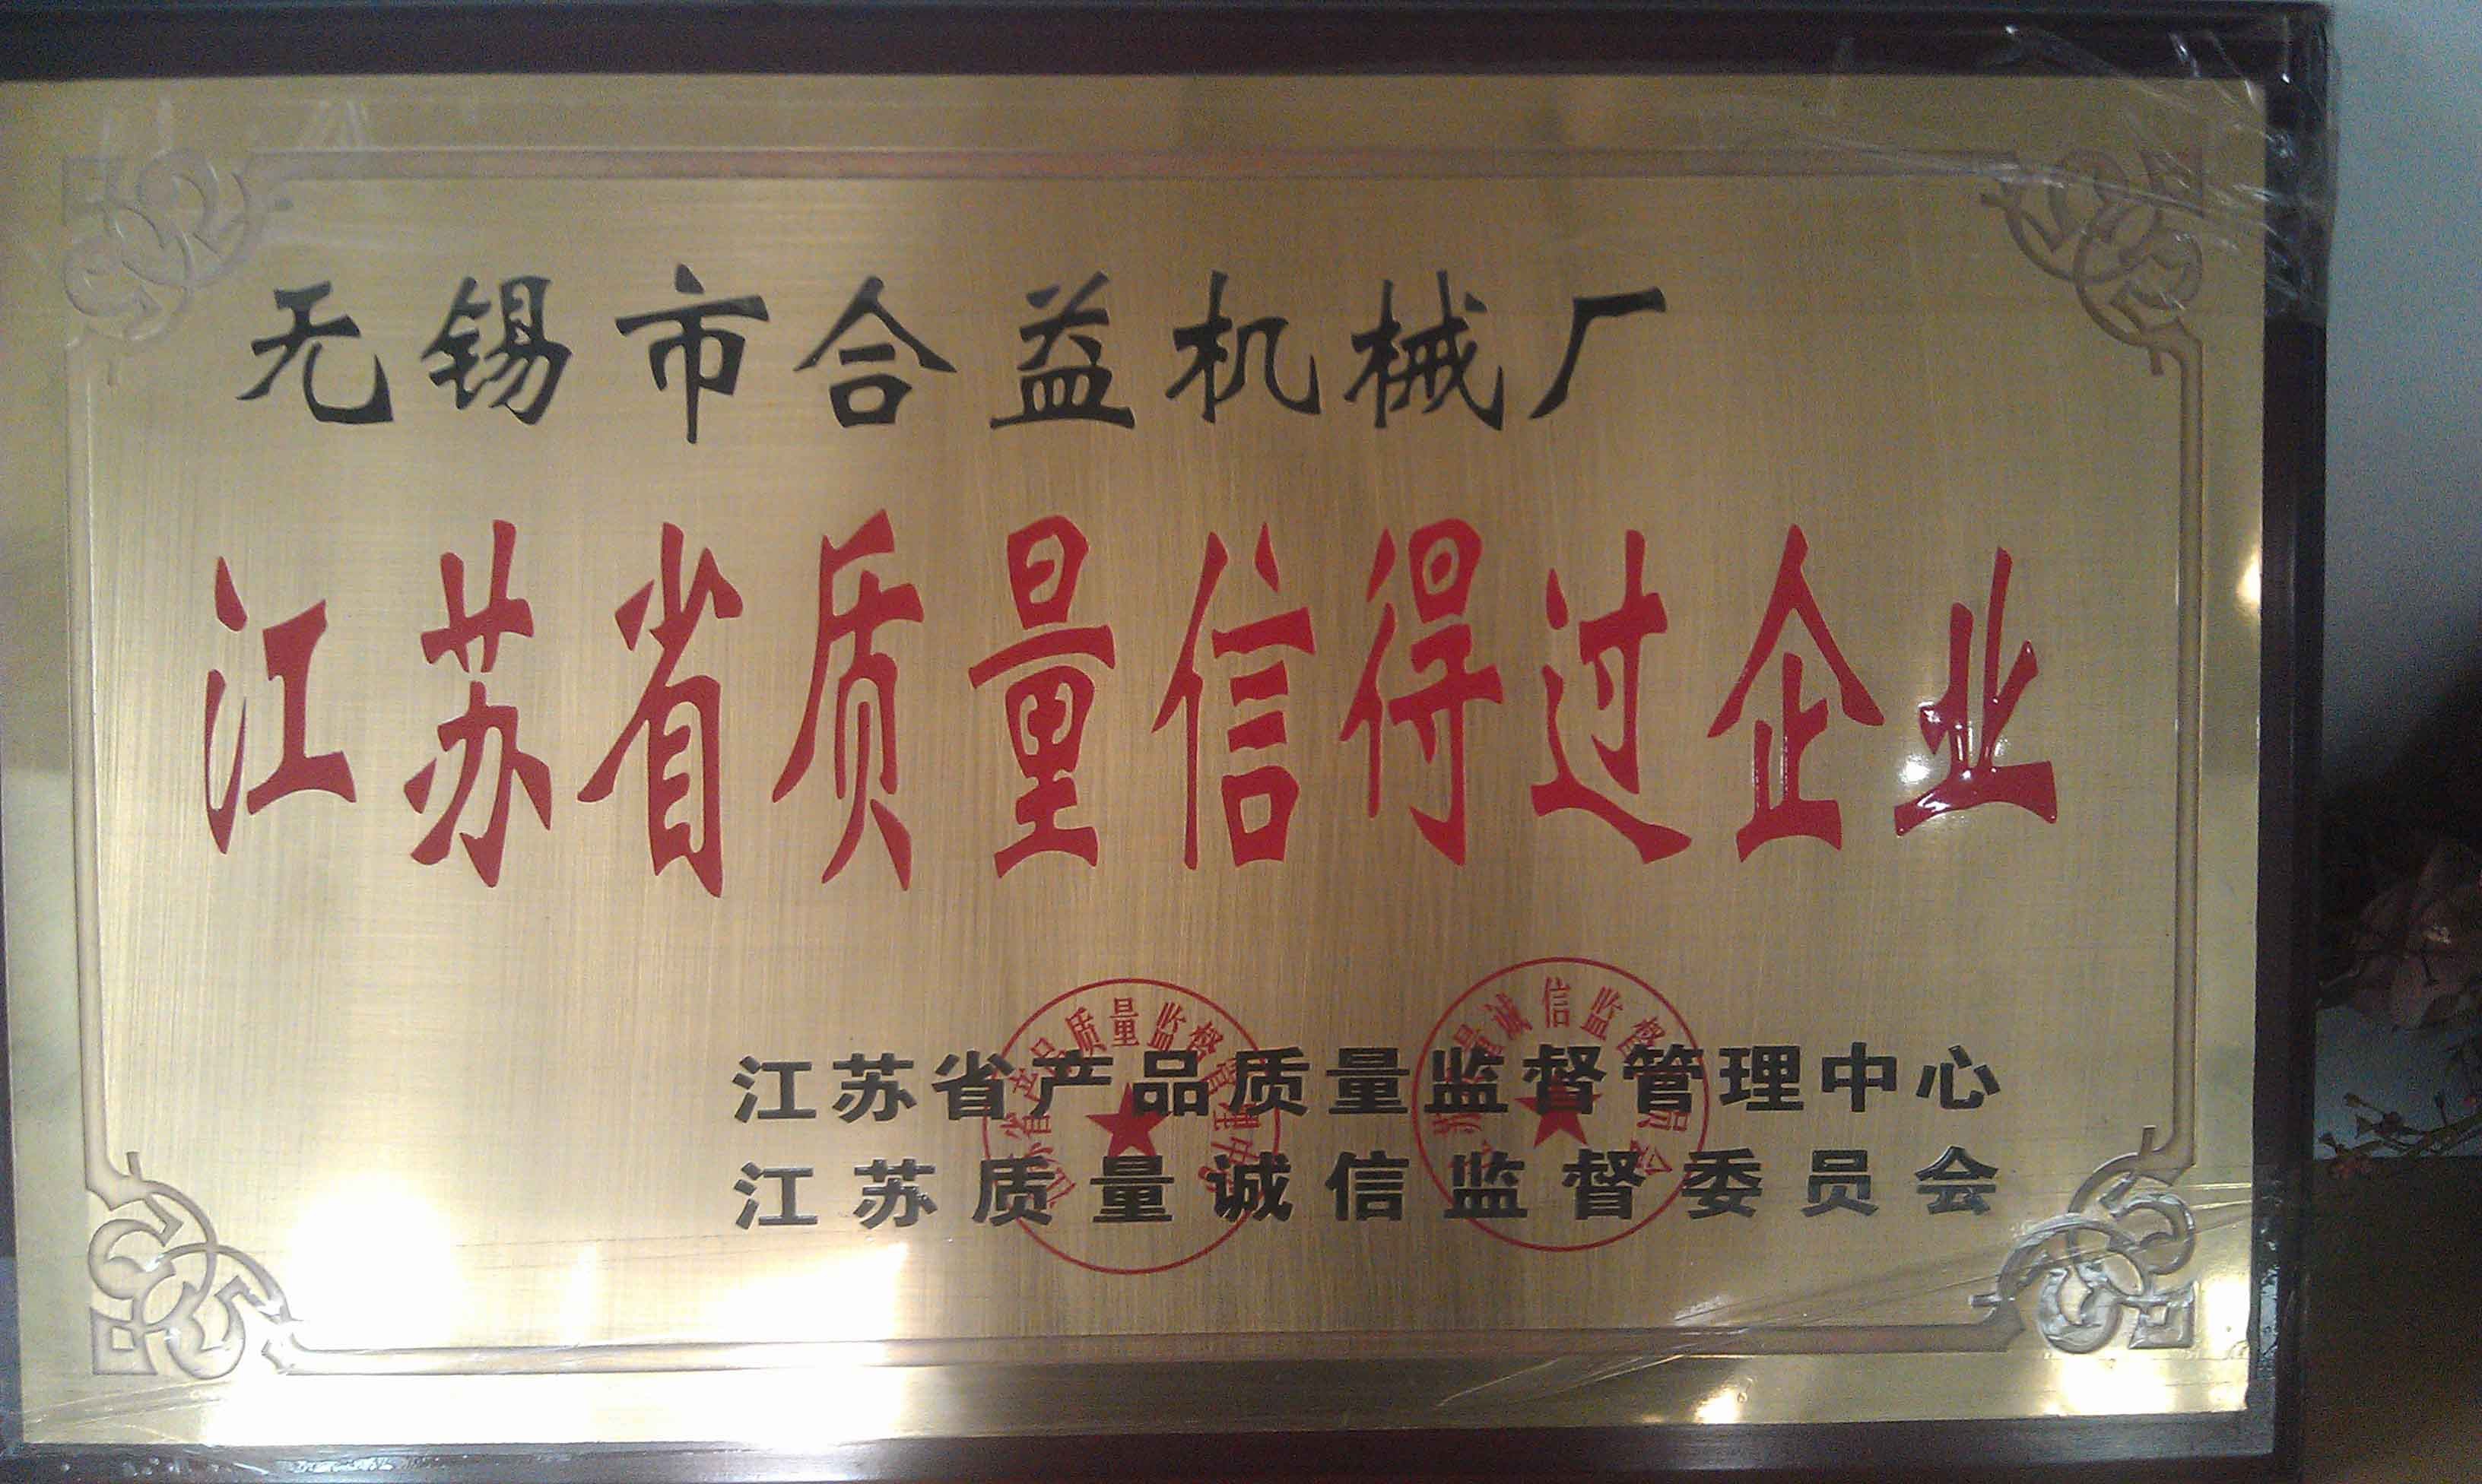 China Jiangsu New Heyi Machinery Co., Ltd Certification